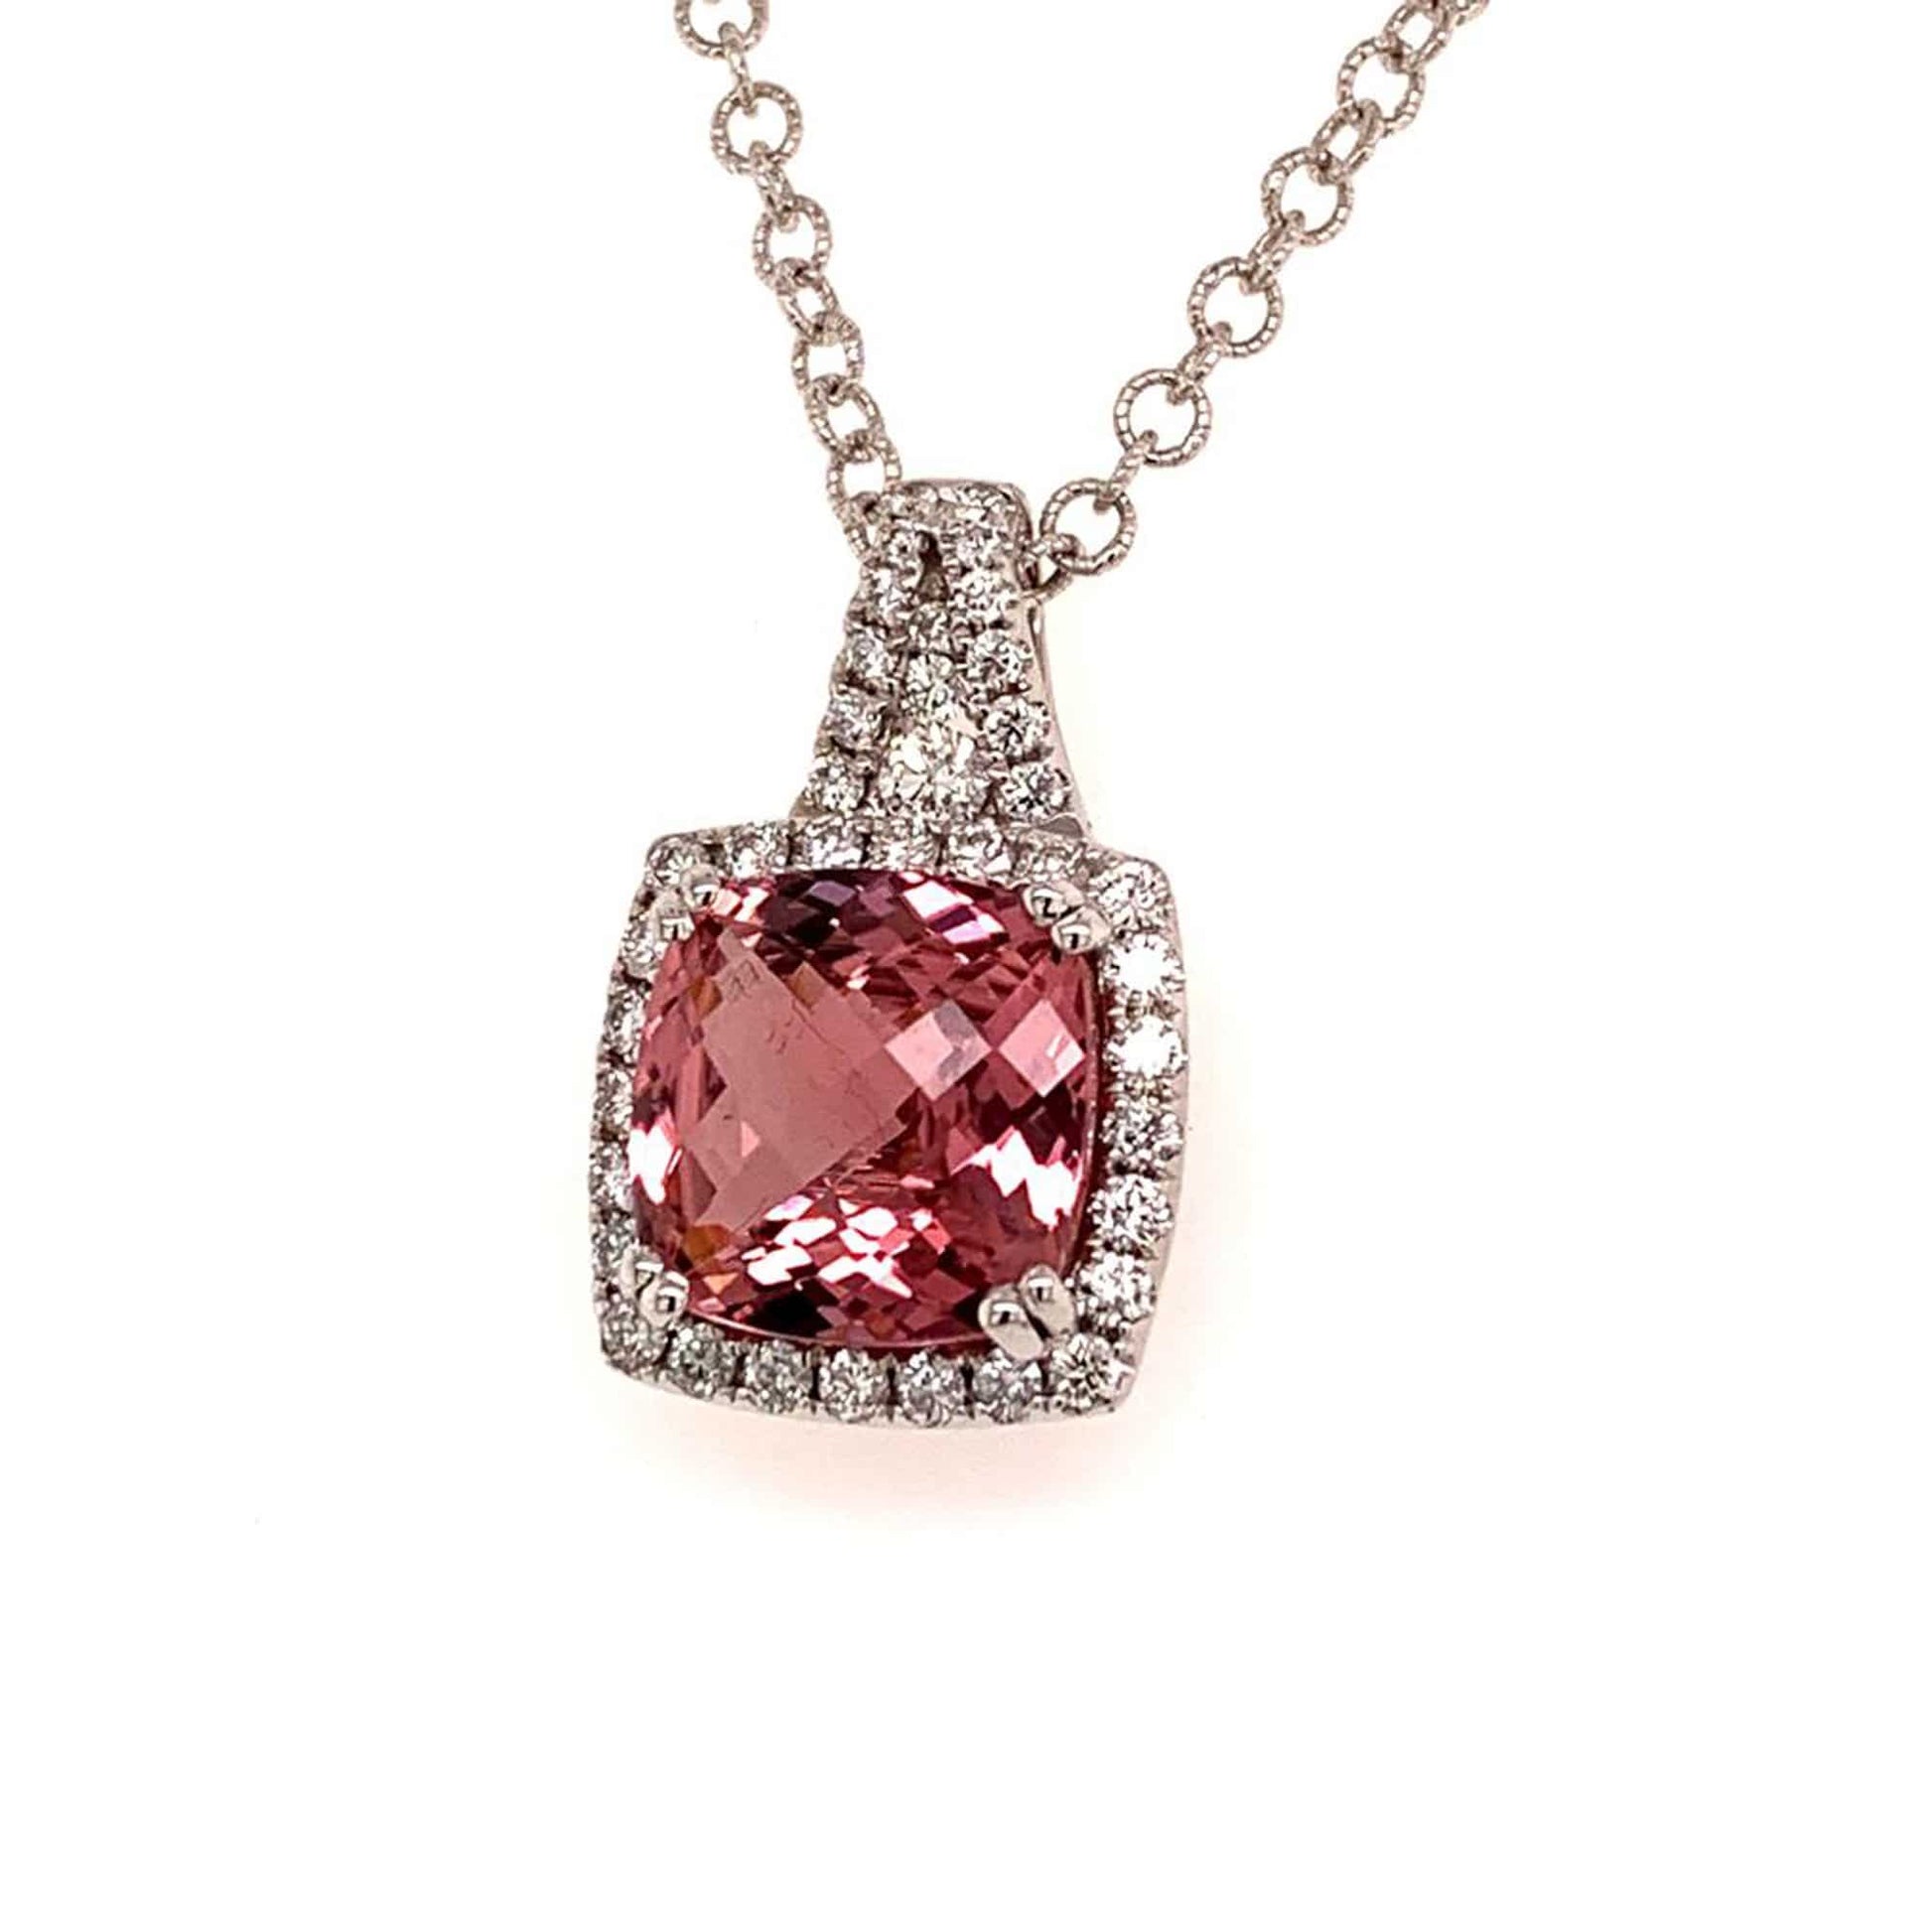 Diamond Rubellite Tourmaline Necklace 5.47 CT 18k Gold Certified $5,590 921150 - Certified Estate Jewelry